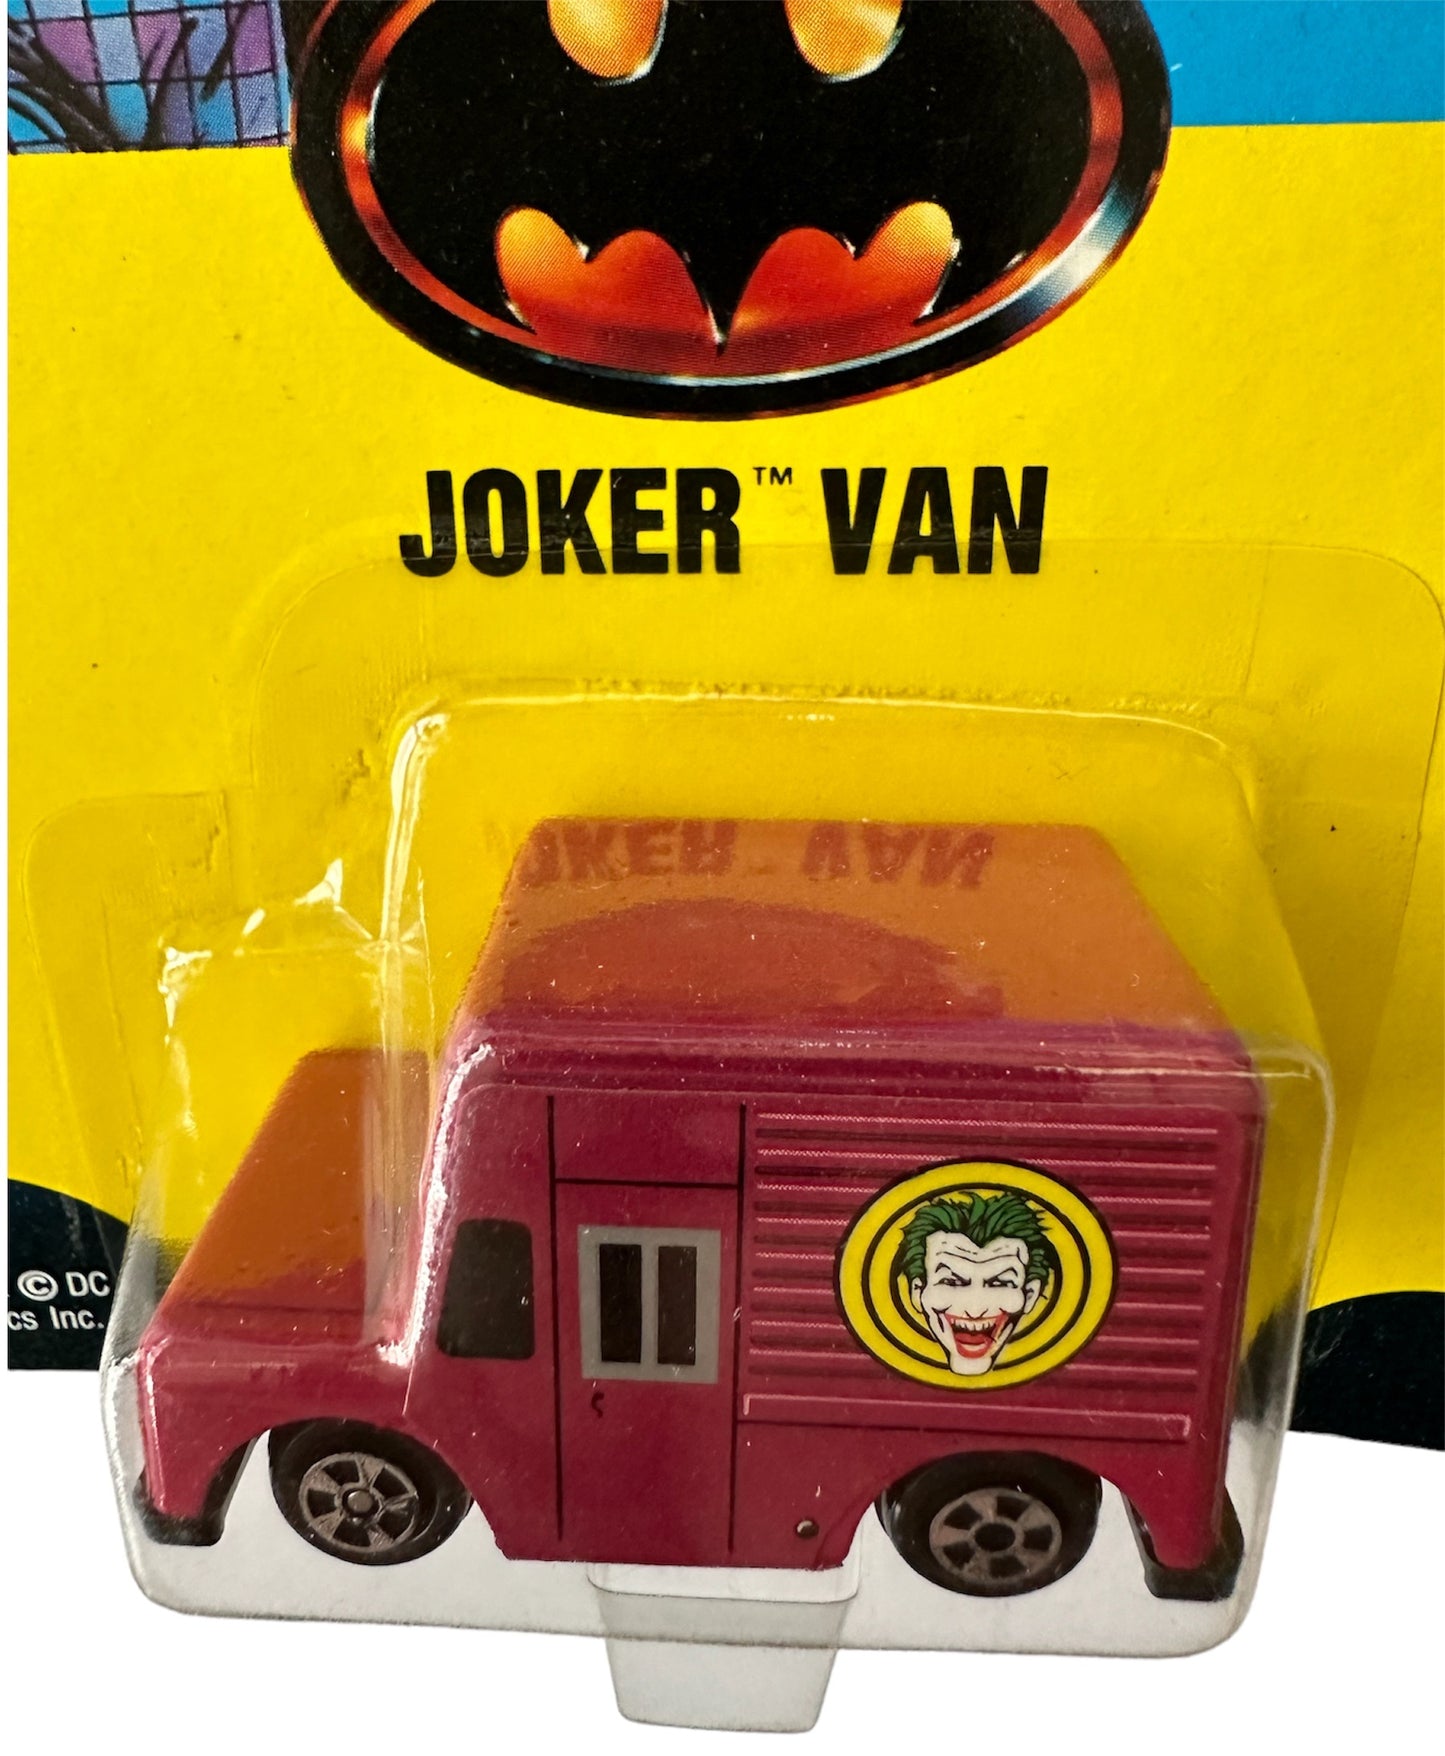 ERTL 1989 Batman The Joker Van 1/64 Scale Die-Cast Metal 2 1/4 Inch Replica Model Vehicle No. 1532 - Brand New Factory Sealed Shop Stock Room Find